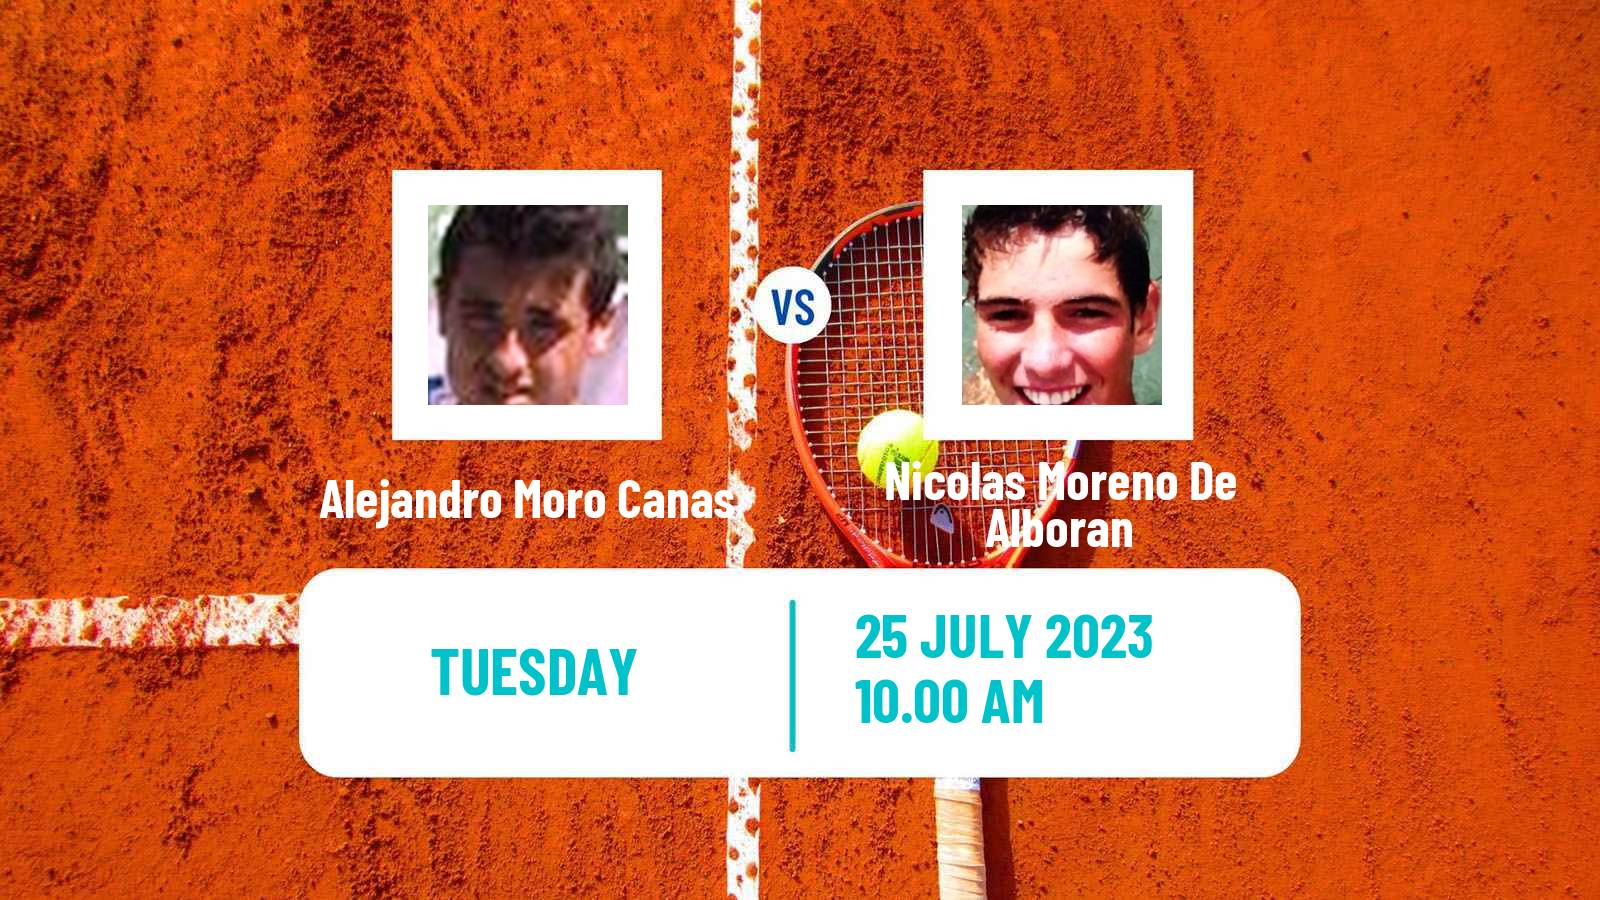 Tennis Segovia Challenger Men Alejandro Moro Canas - Nicolas Moreno De Alboran